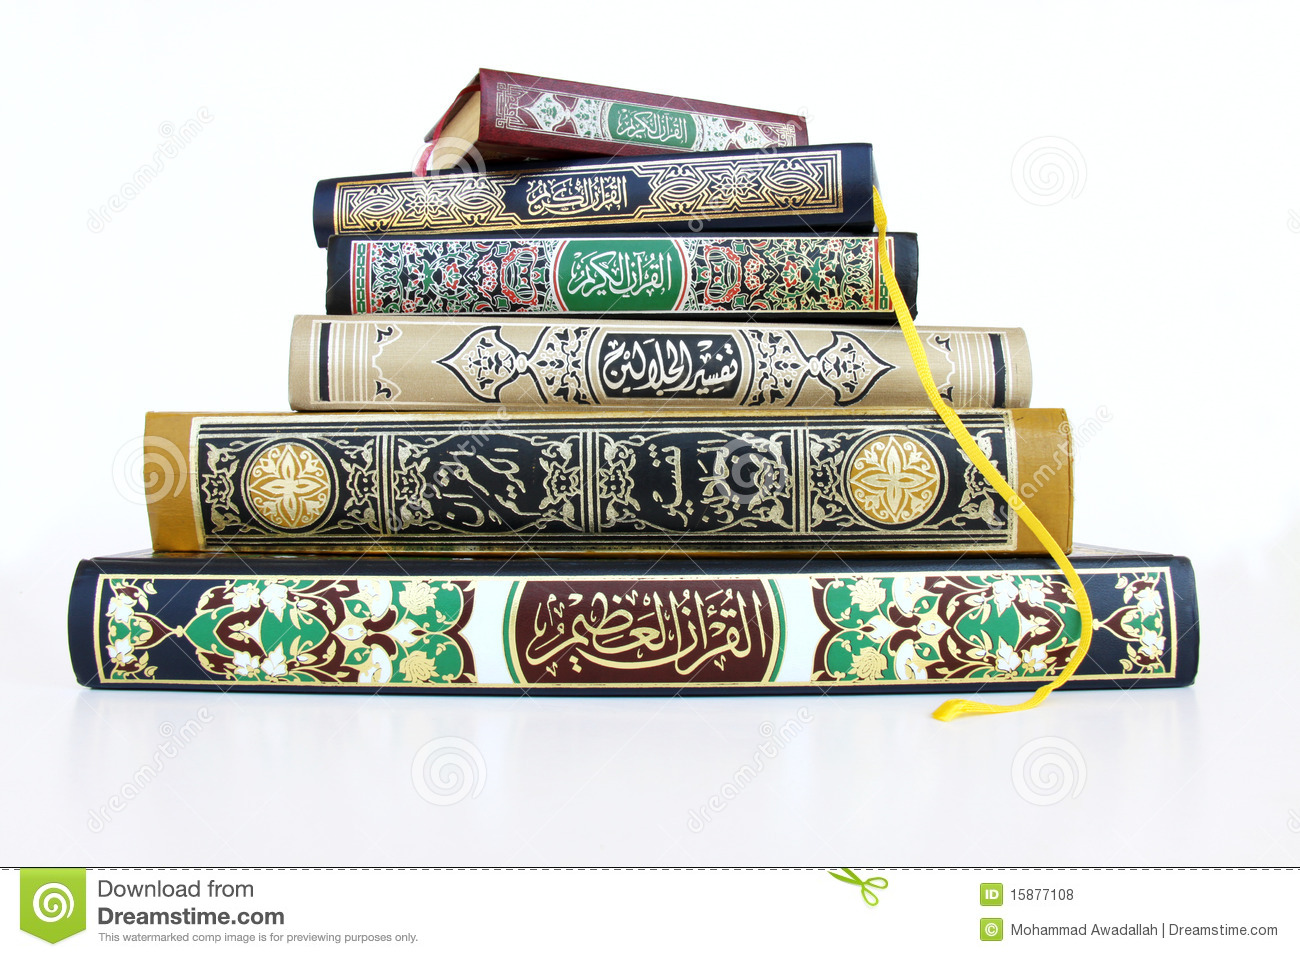 Free Download Islamic Books In Arabic